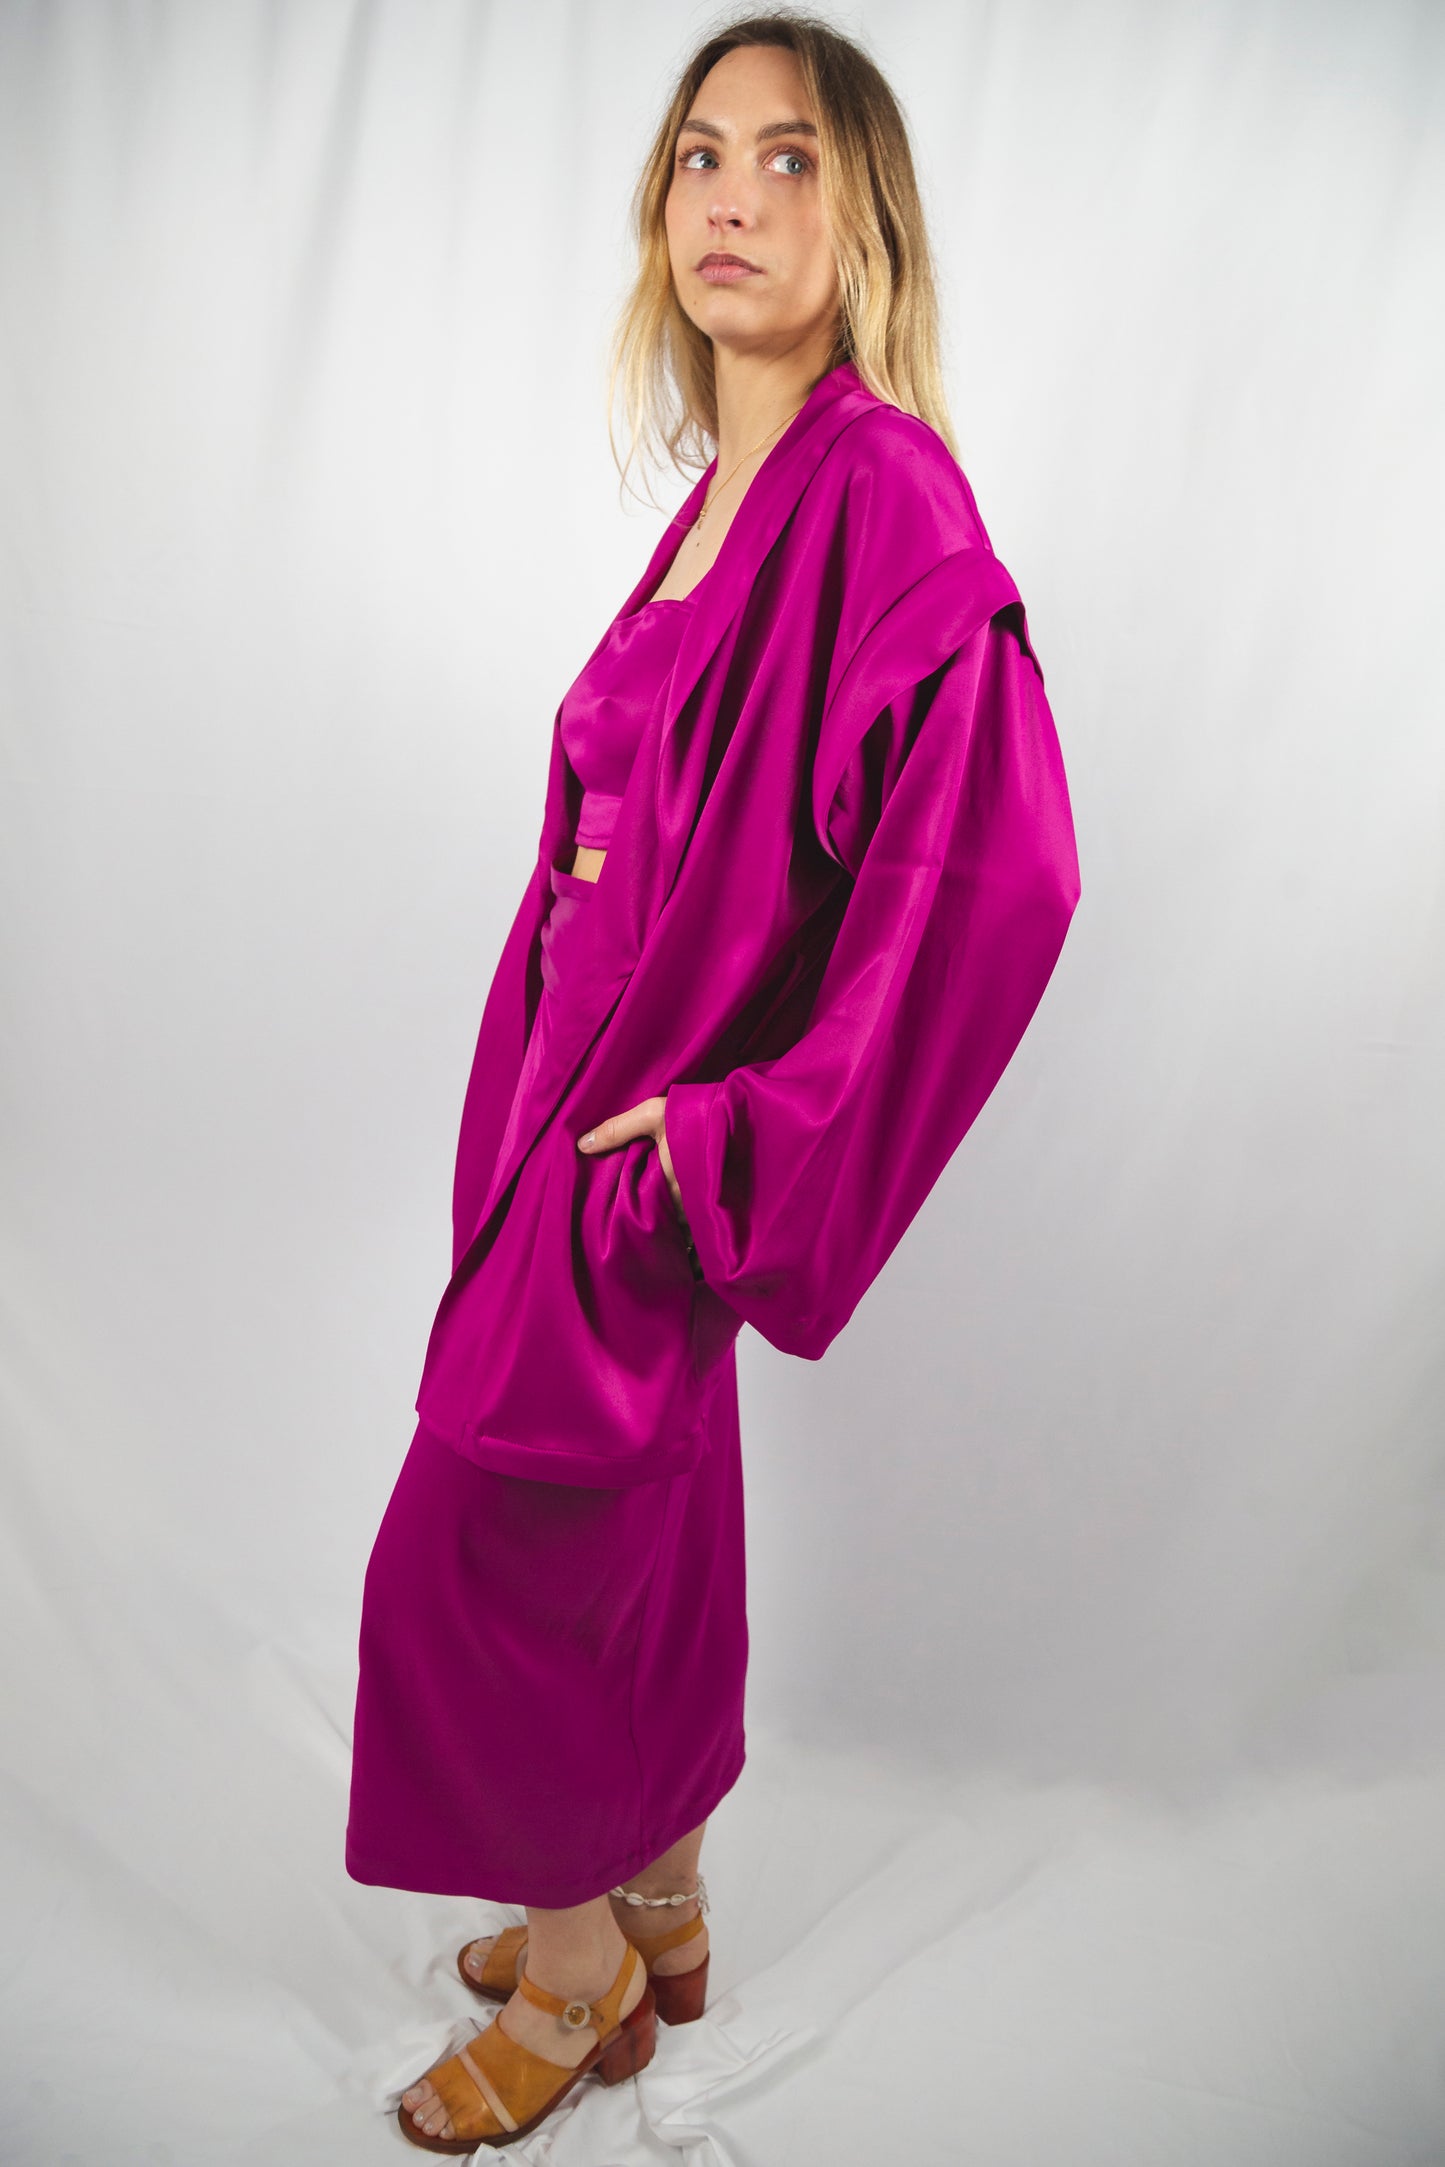 KITA - La Veste Kimono aux Manches Amovibles - Rose Magenta